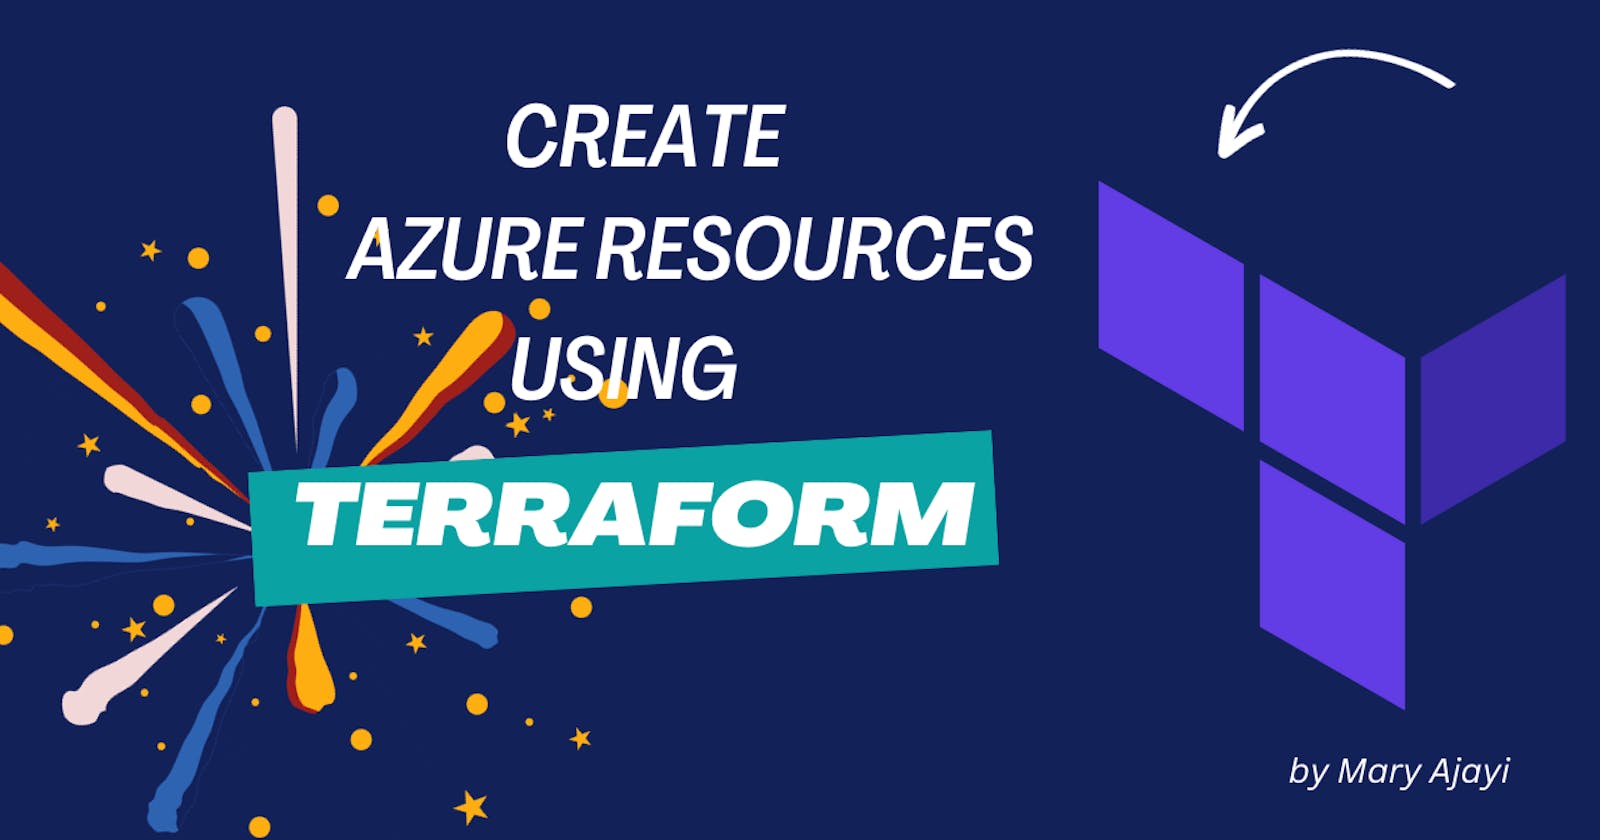 Create Azure resources using Terraform